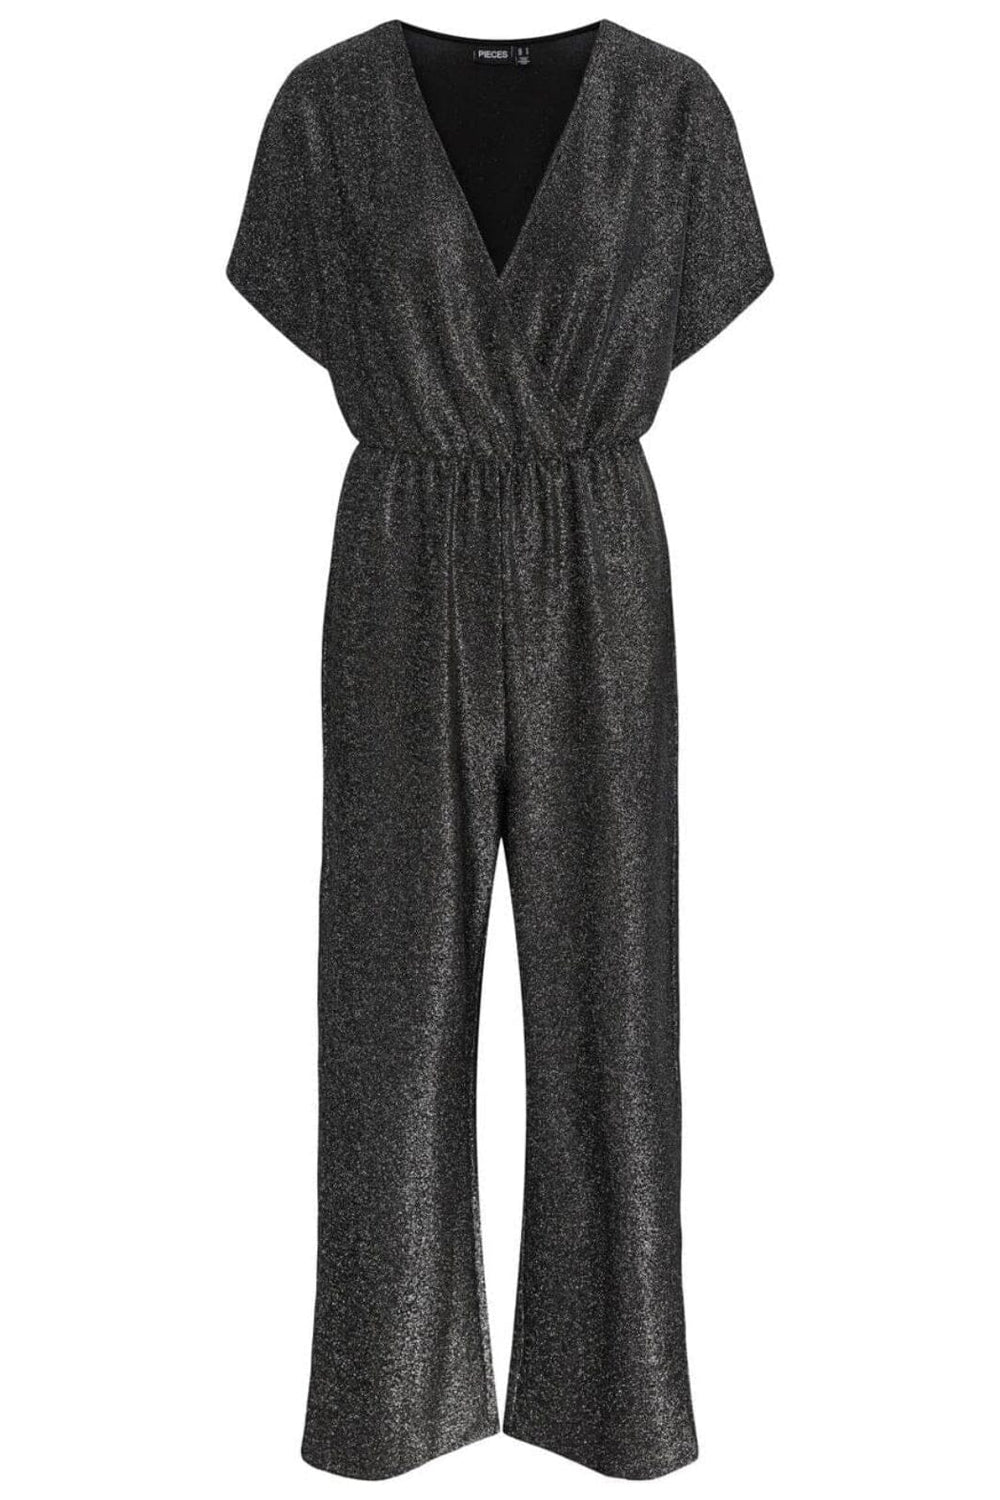 Pieces - Pcserina Ss Wrap Jumpsuit - 4348991 Black Silver Glitter Buksedragter 